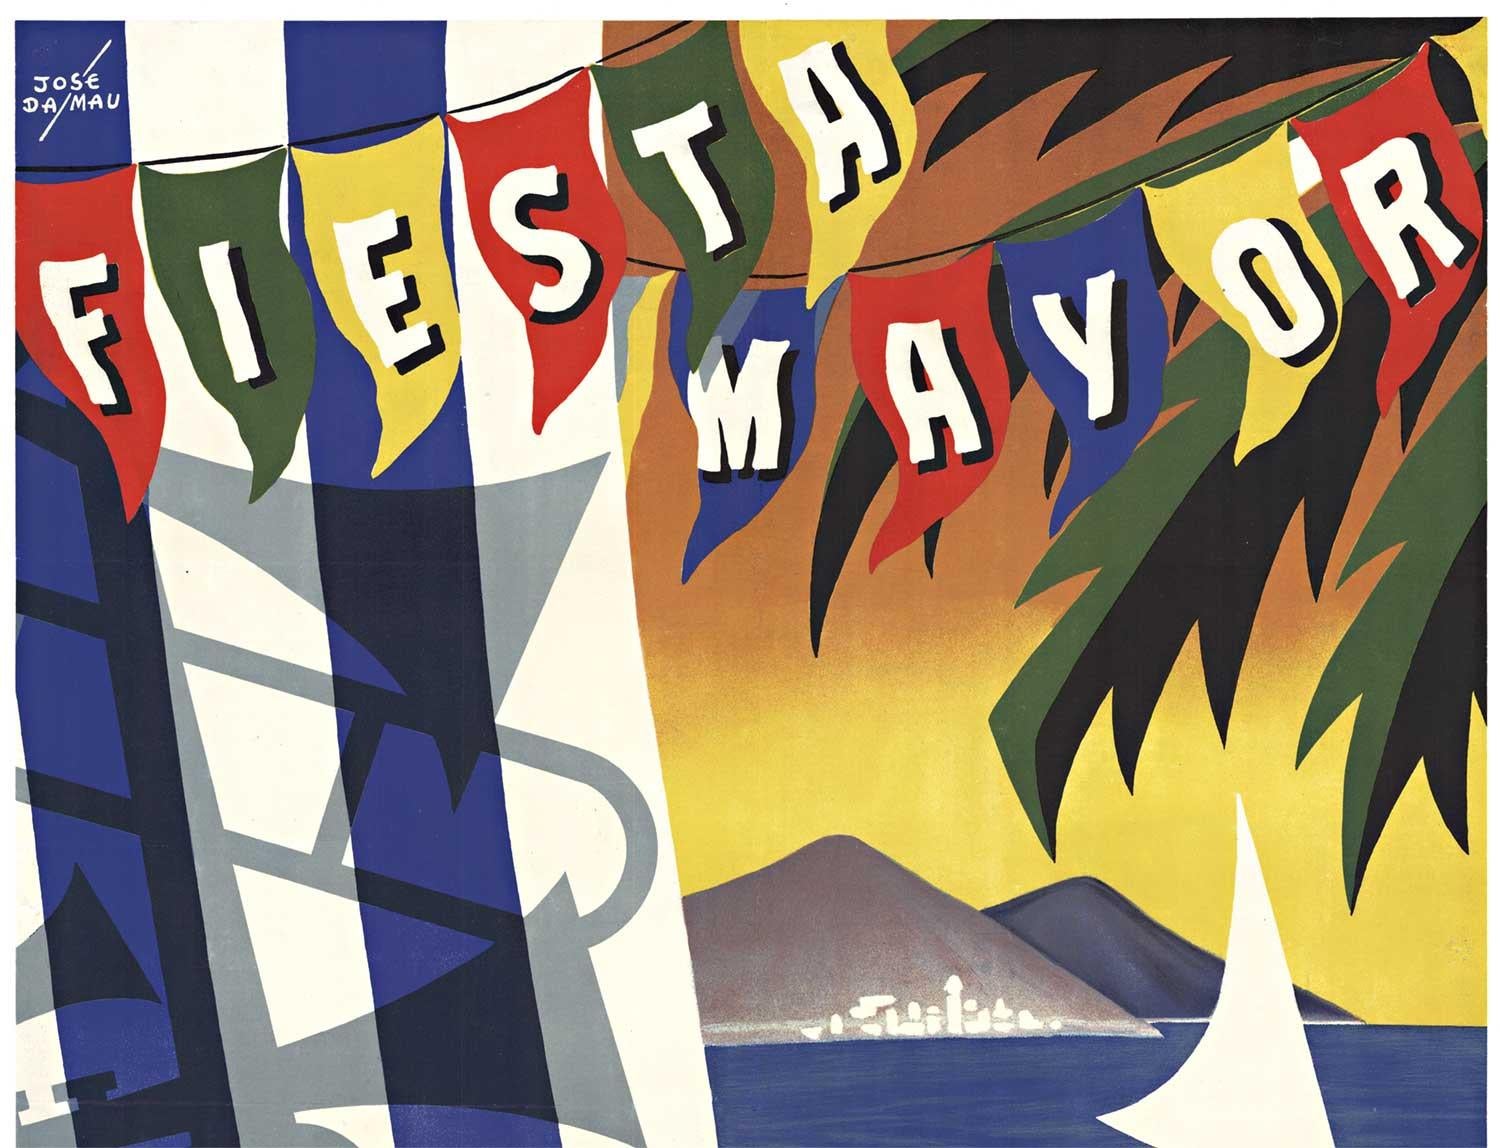 Original 'Fiesta Mayor Badalona' vintage Spanish festival poster  1955 - Print by Jose Dalmau